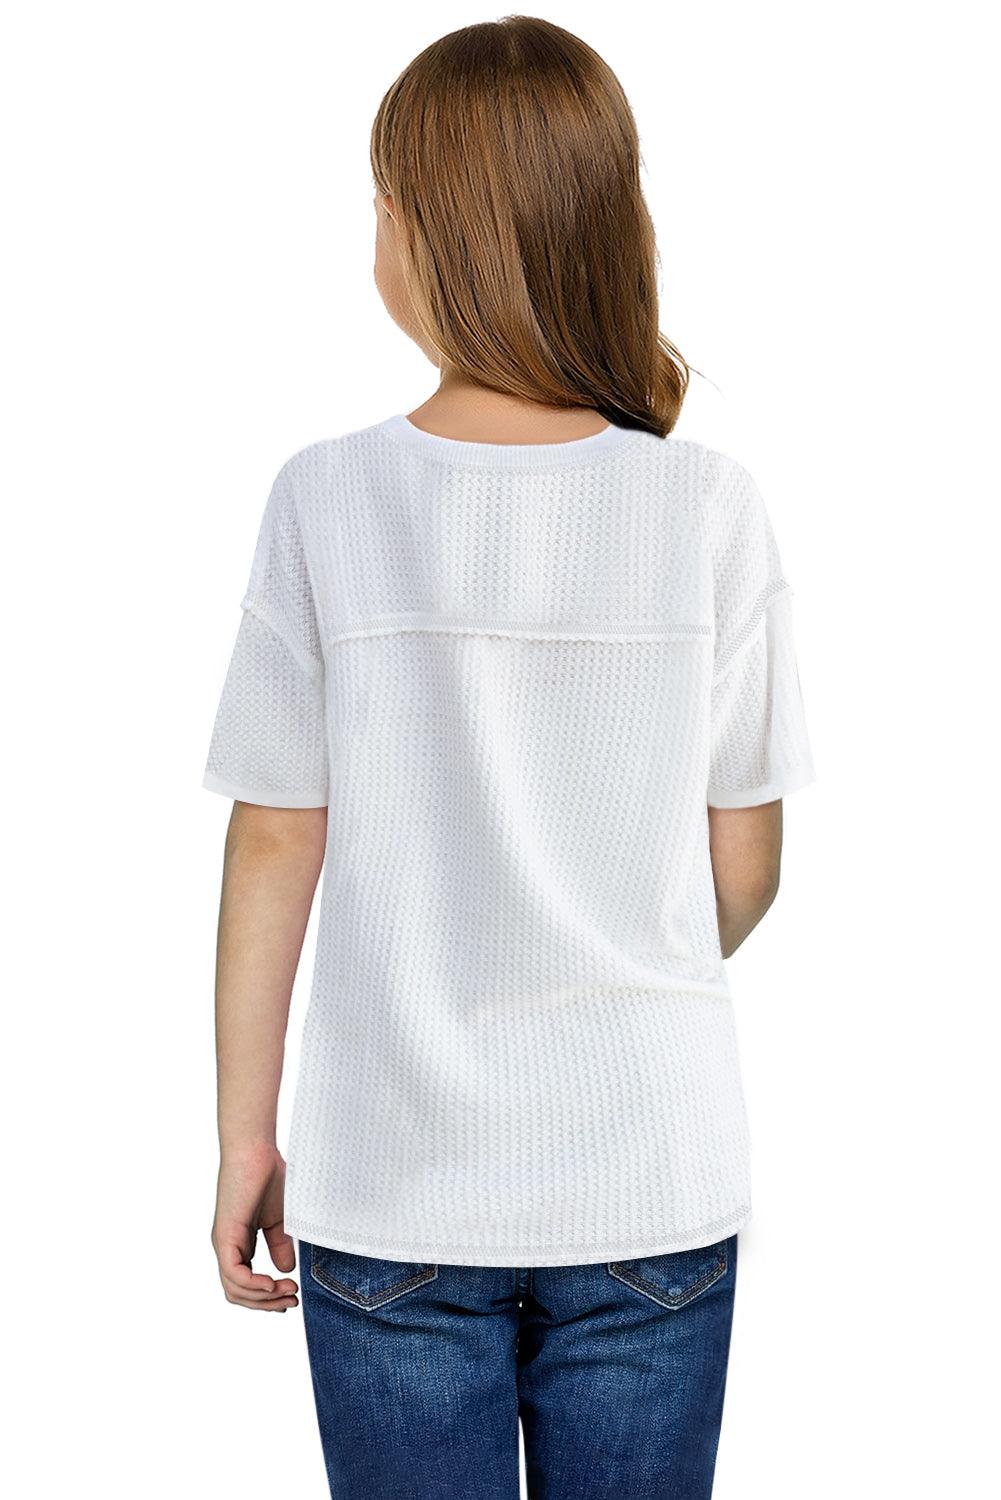 Textured V Neck Short Sleeve Girl's T Shirt - L & M Kee, LLC